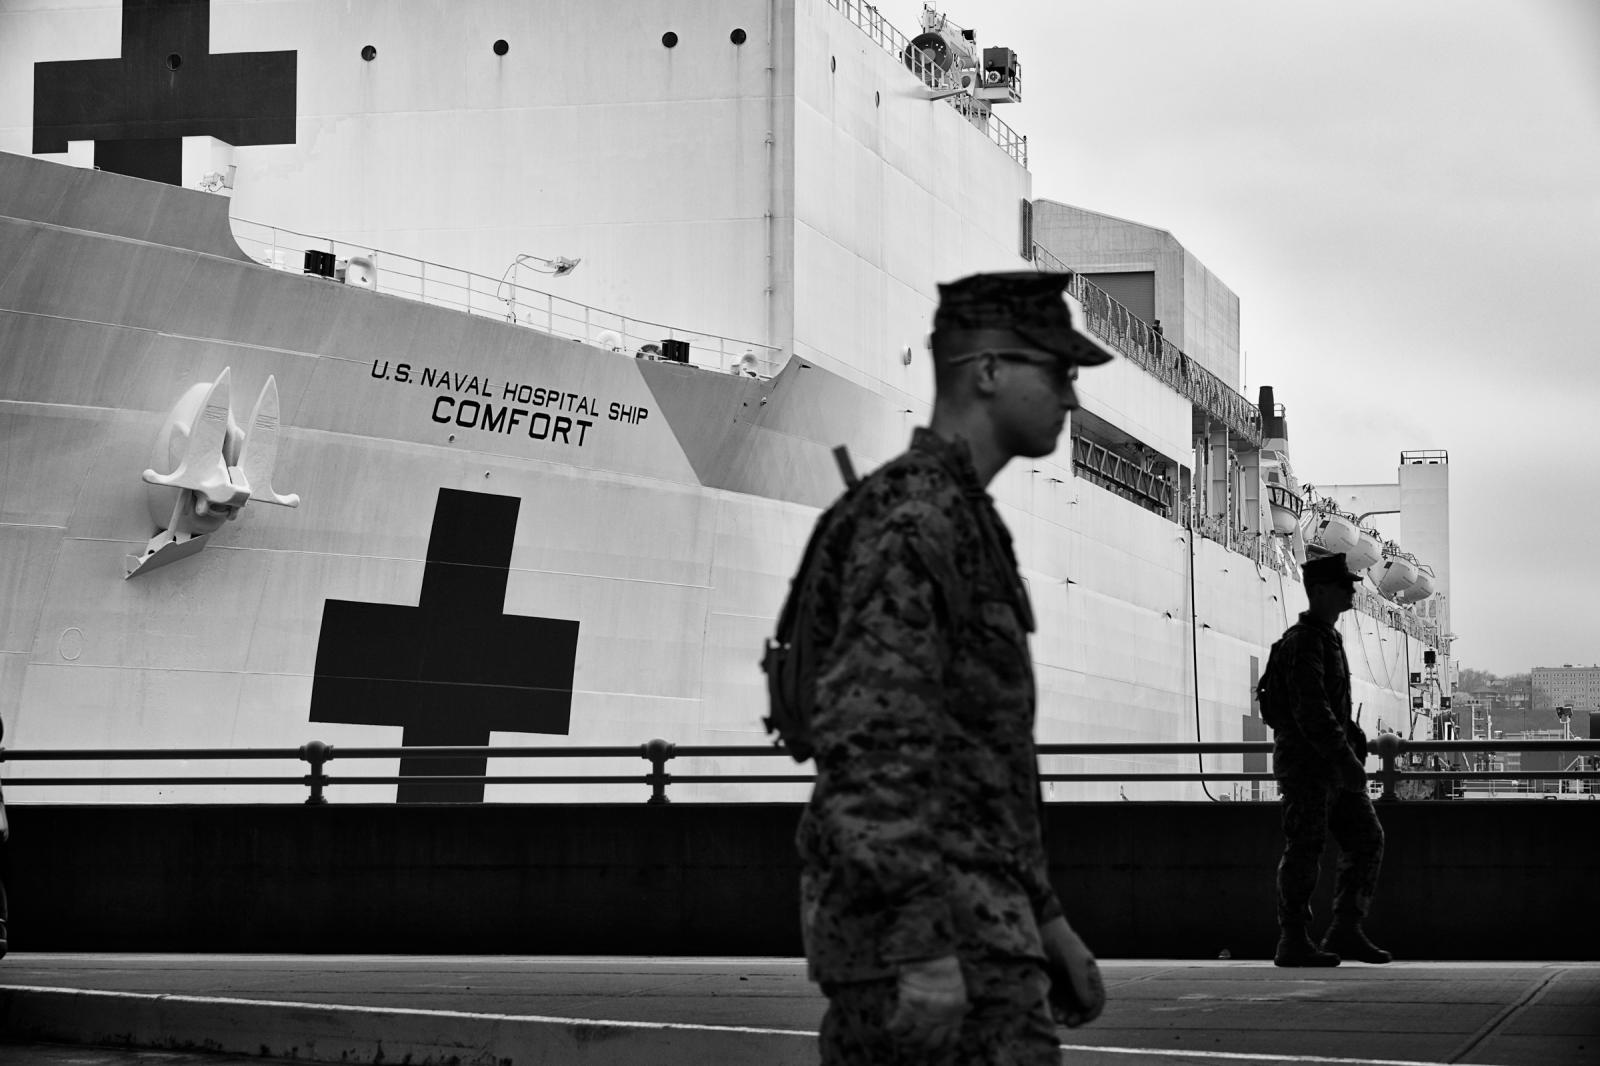 The U.S. Naval Hospital Ship Co...w York harbor on Apr. 30, 2020.